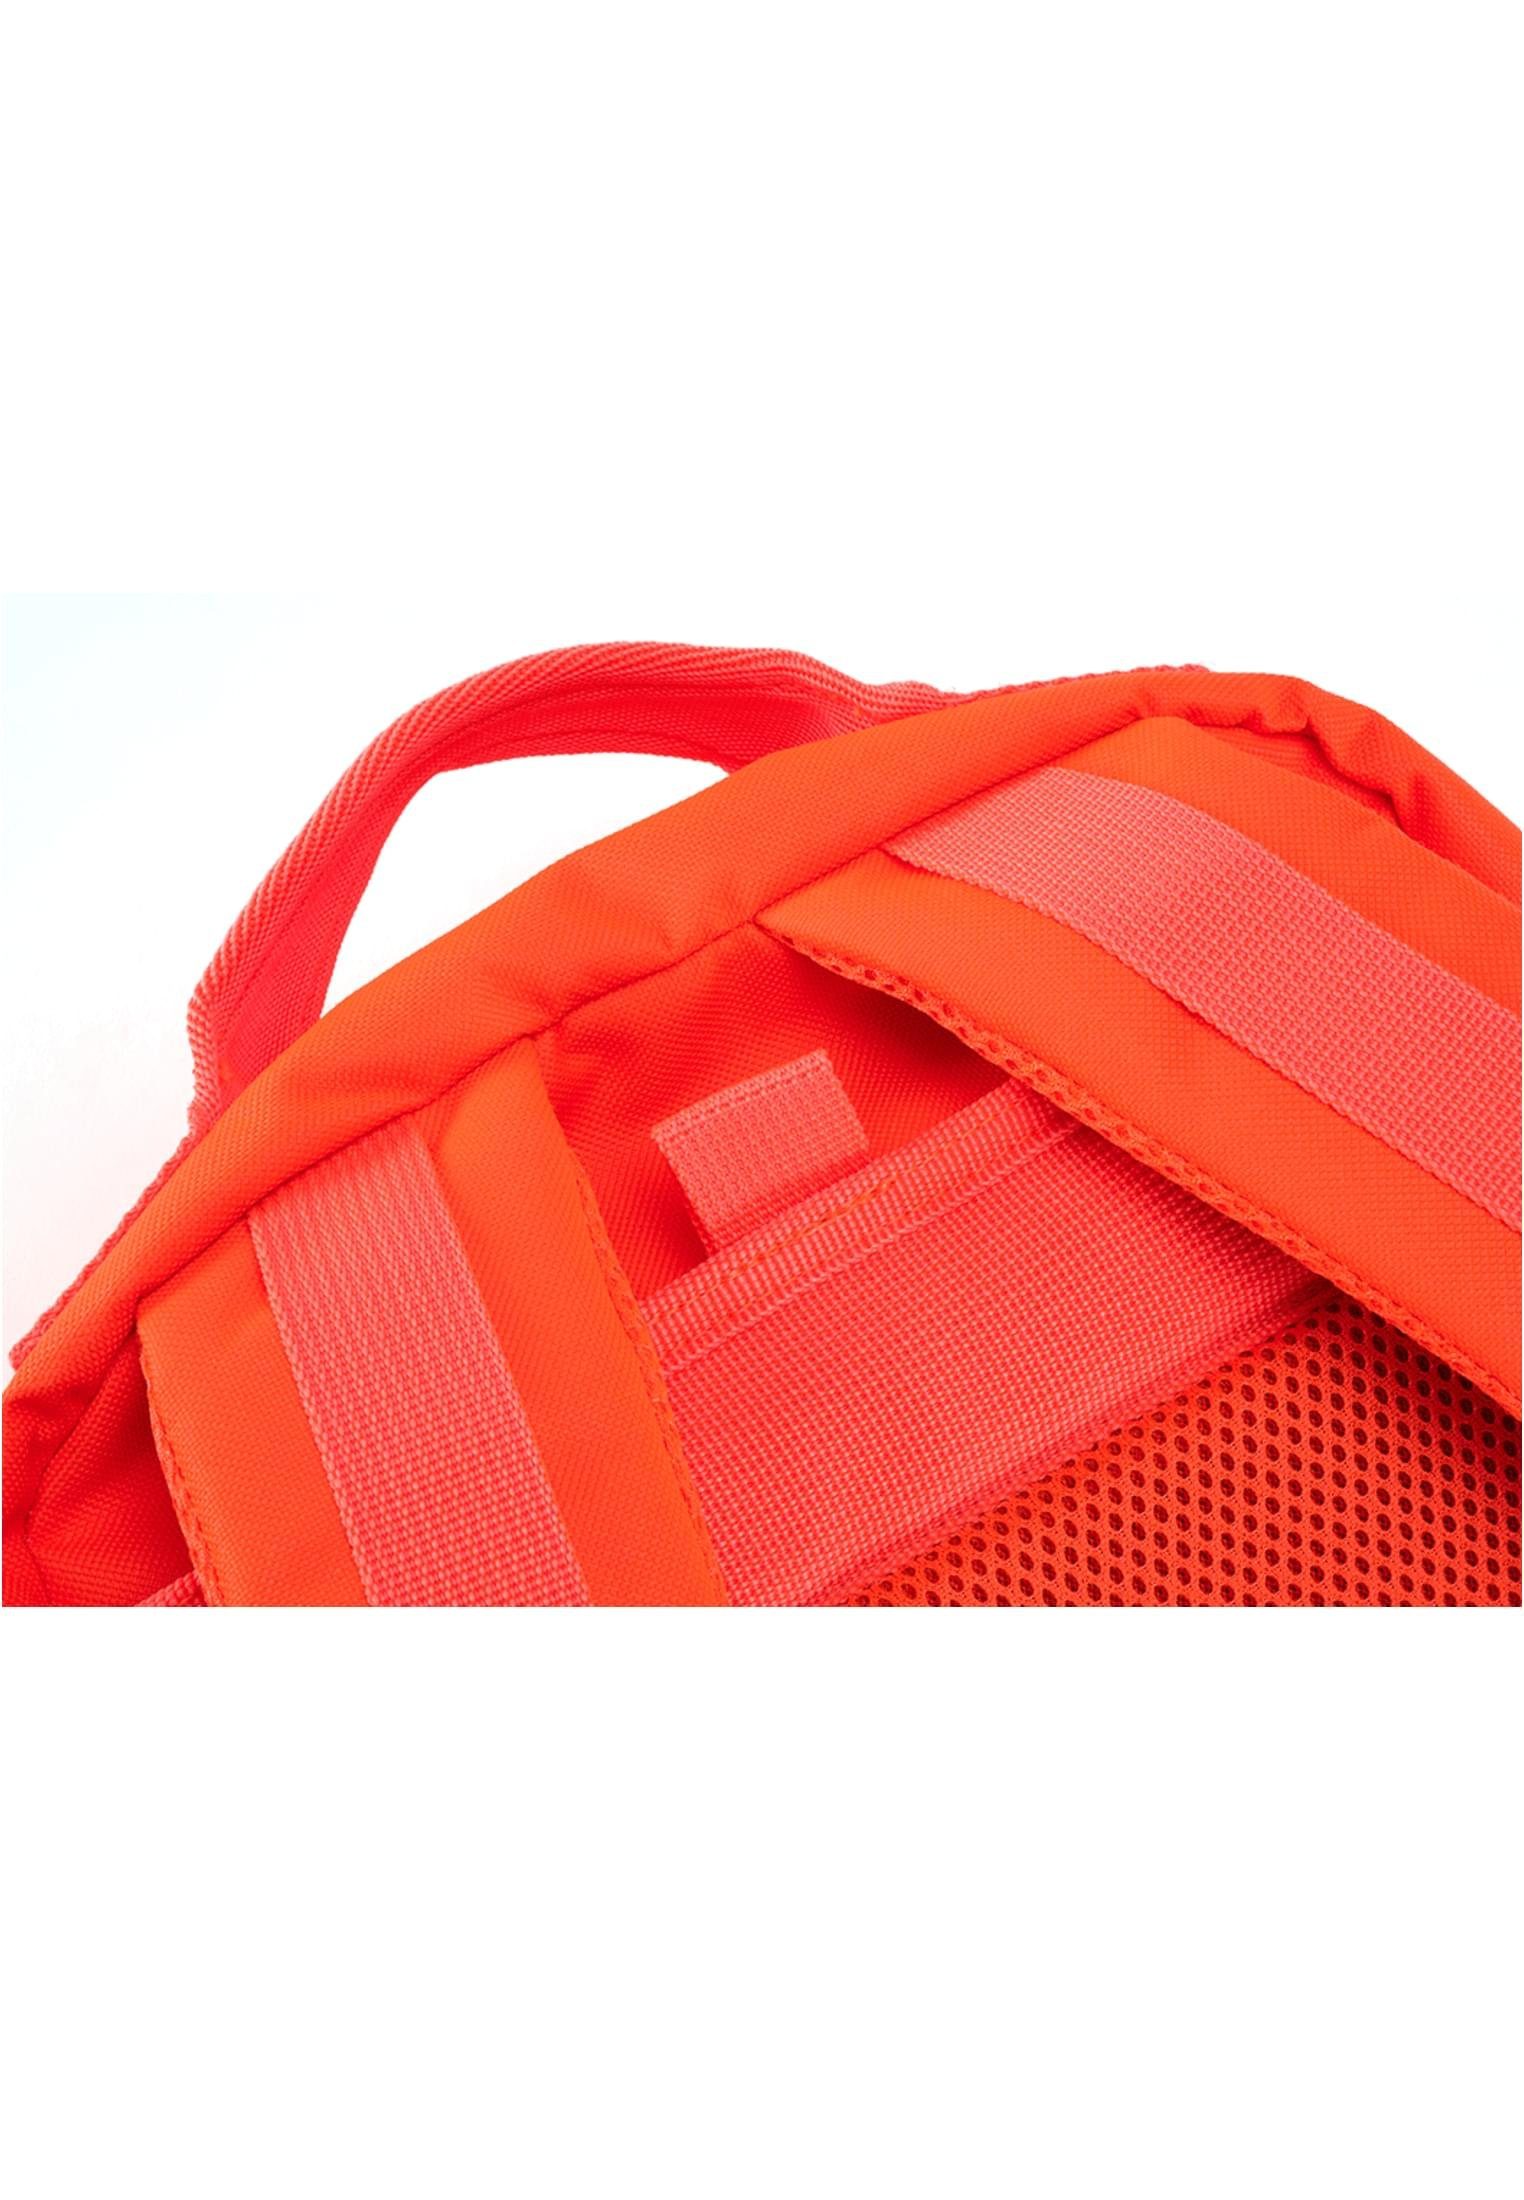 Brandit Rucksack Accessoires Medium US Backpack orange Cooper